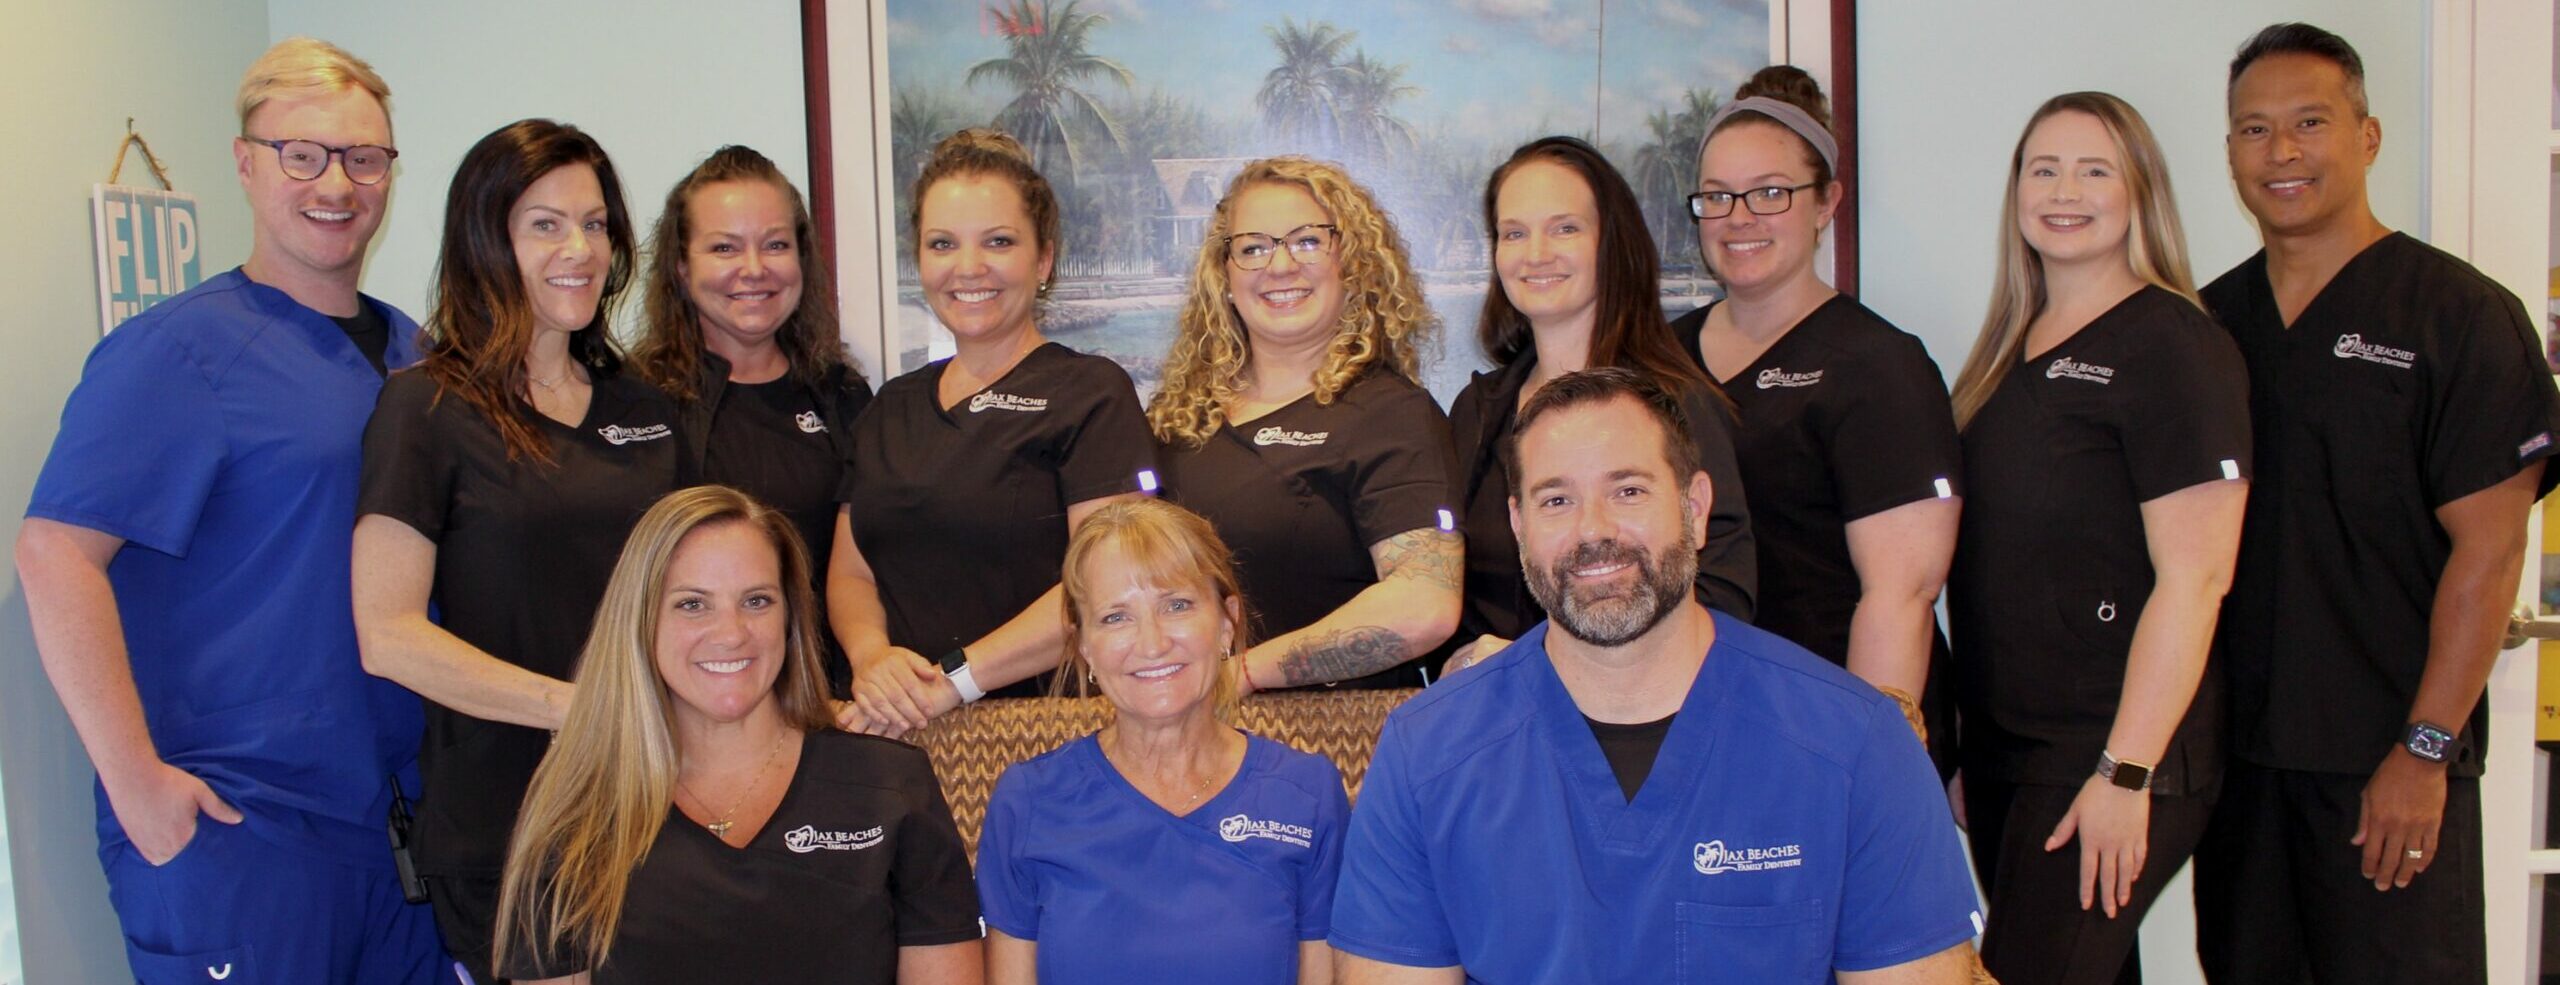 Our team at Jax Beaches Family Dentistry in Neptune Beach, FL